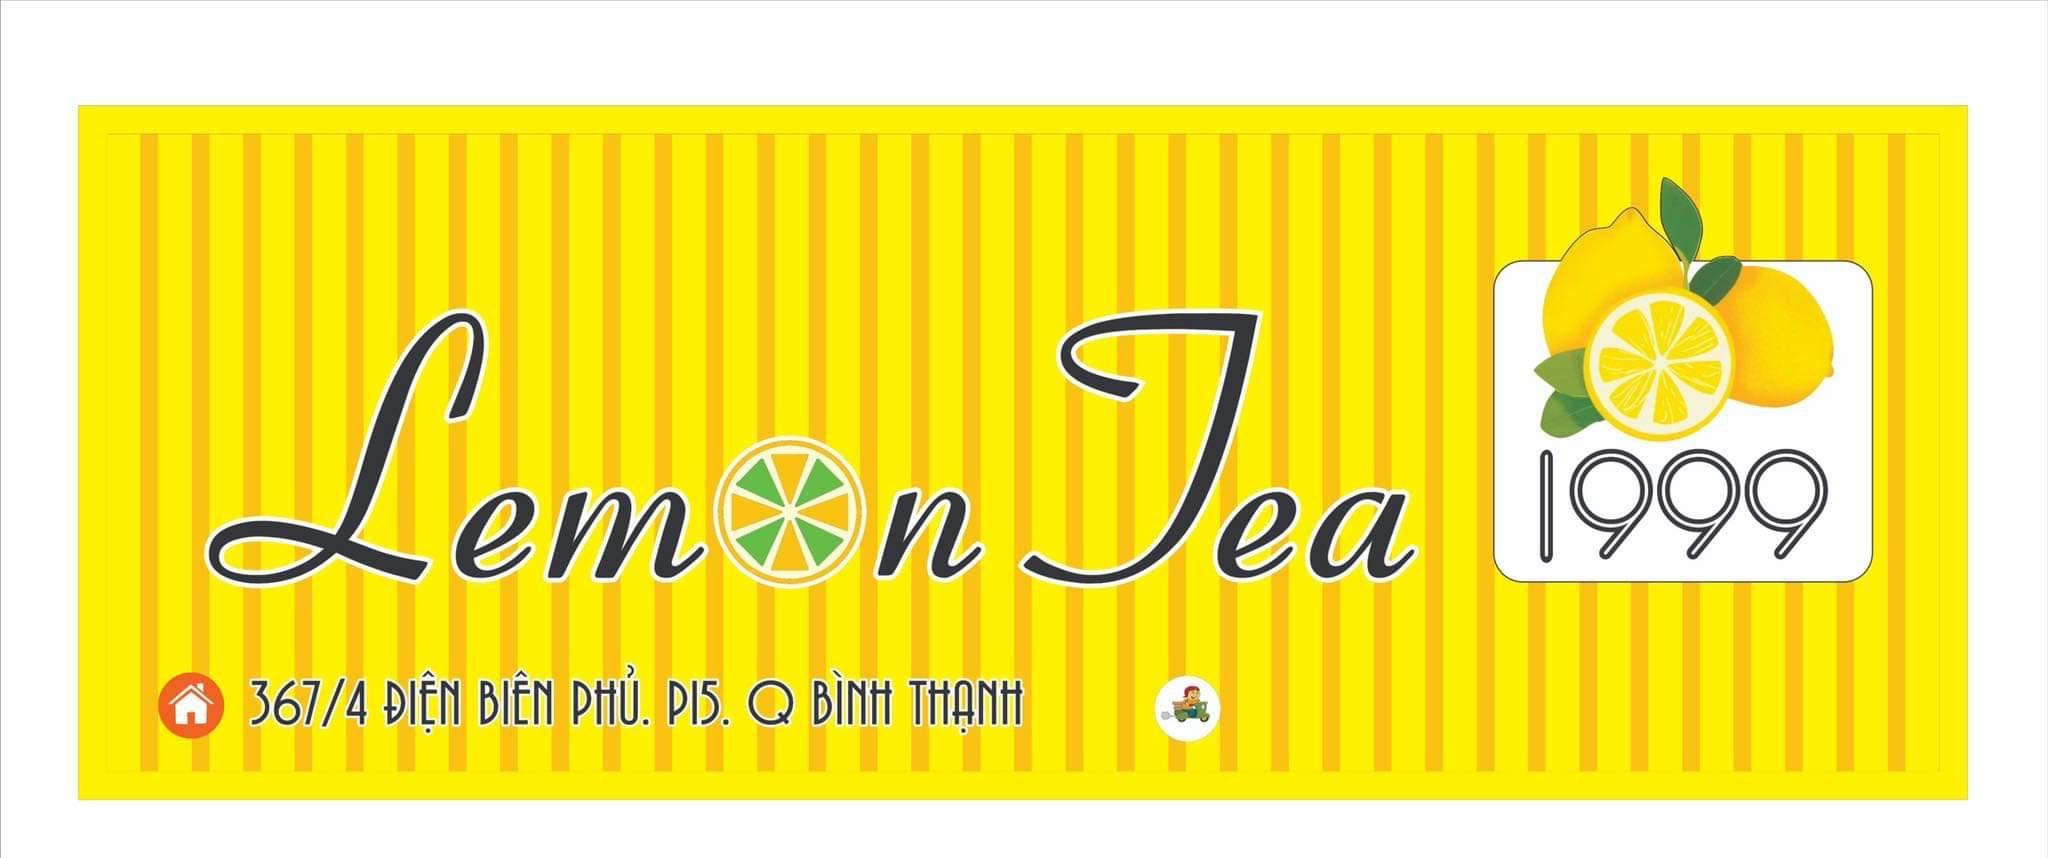 Lemon Tea 1999